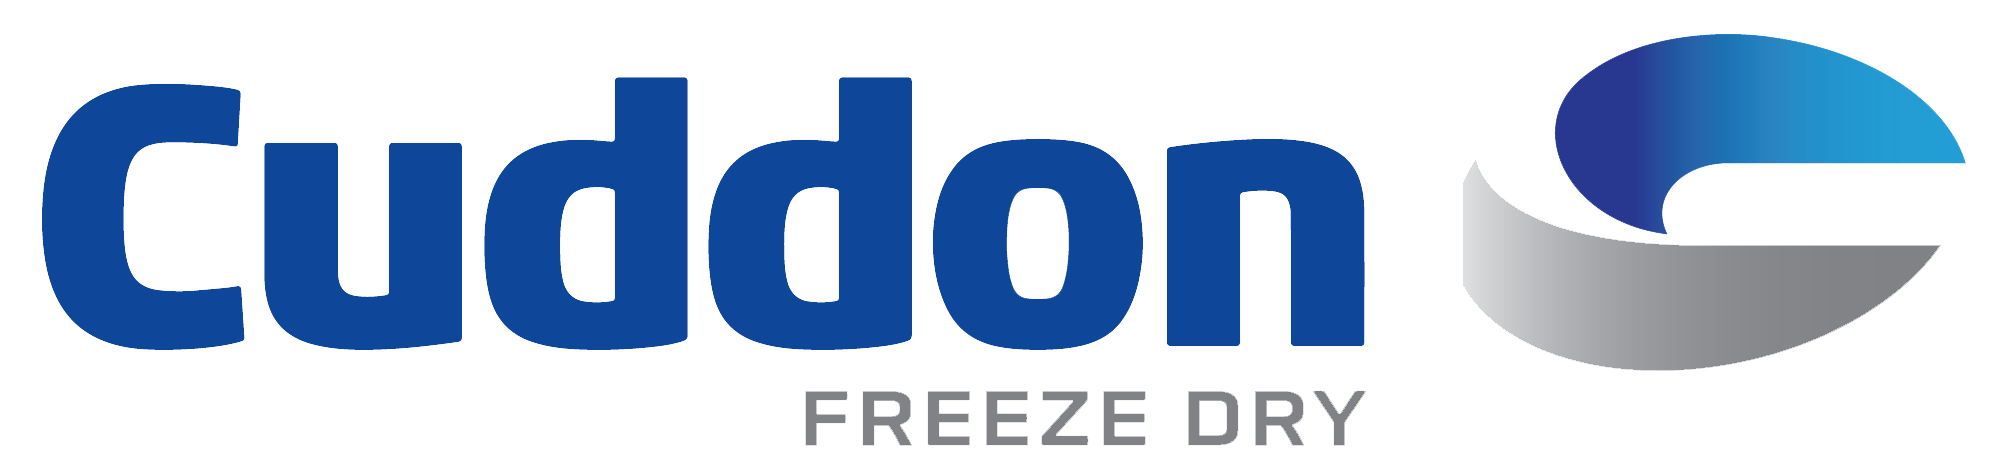 Cuddon Freeze Dry Logo